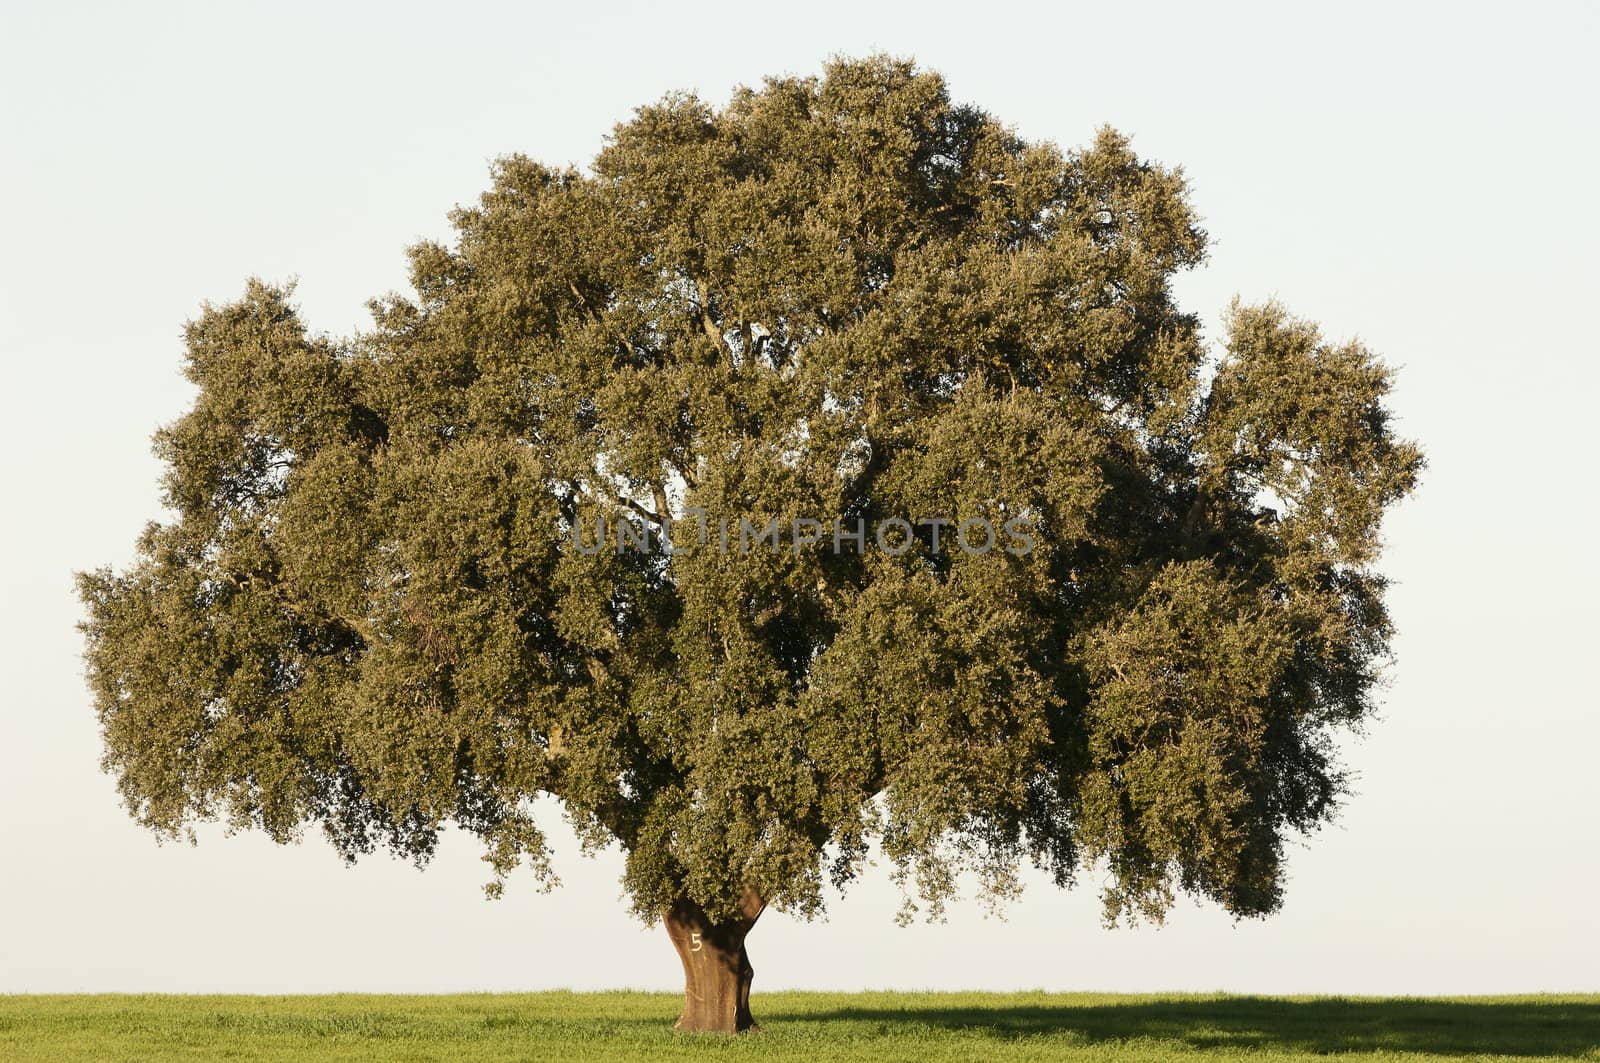 Cork tree by mrfotos